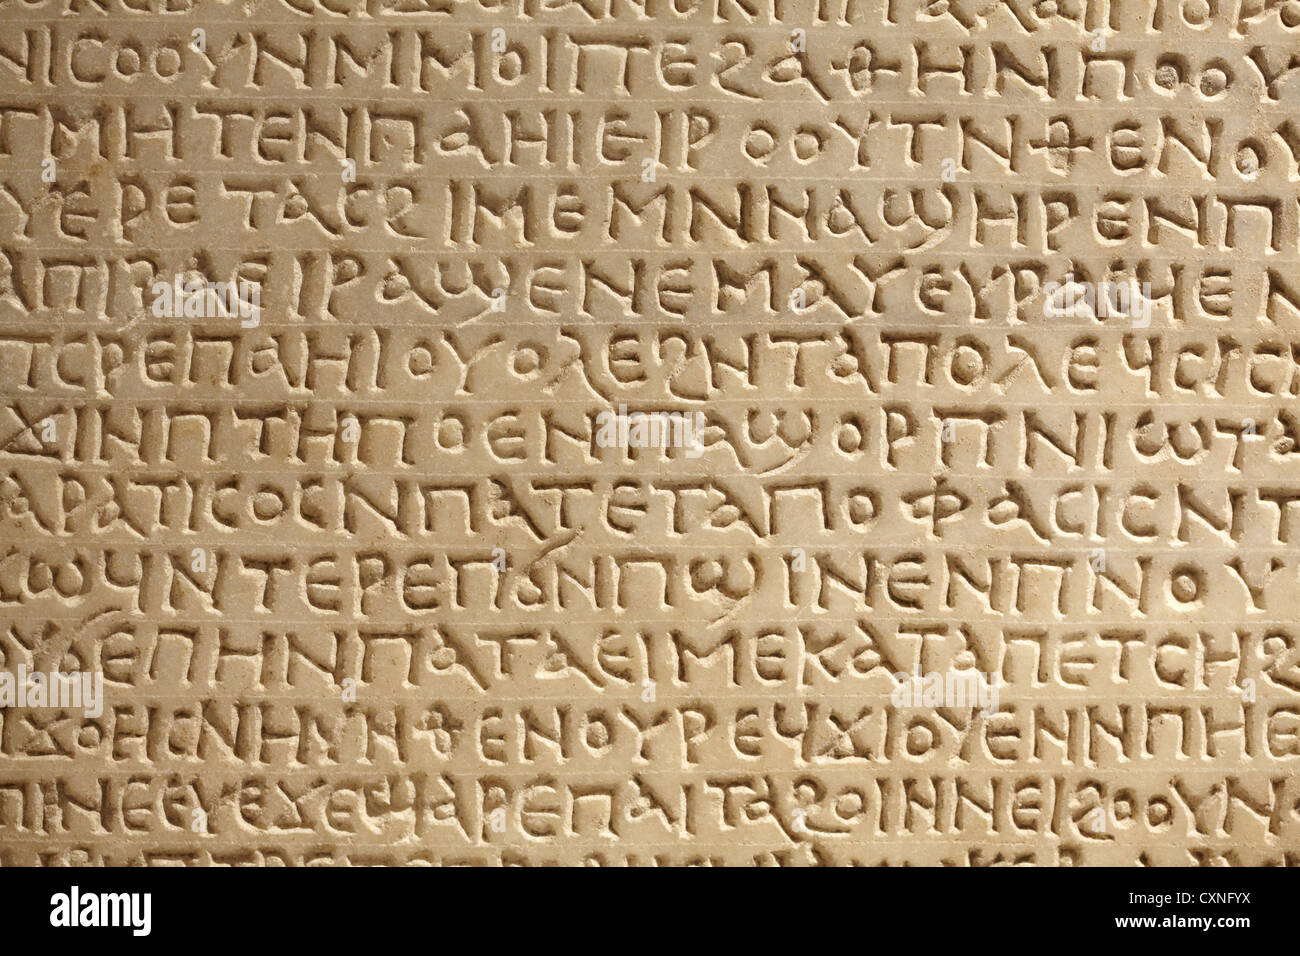 Ancient greek writing on stone background Stock Photo